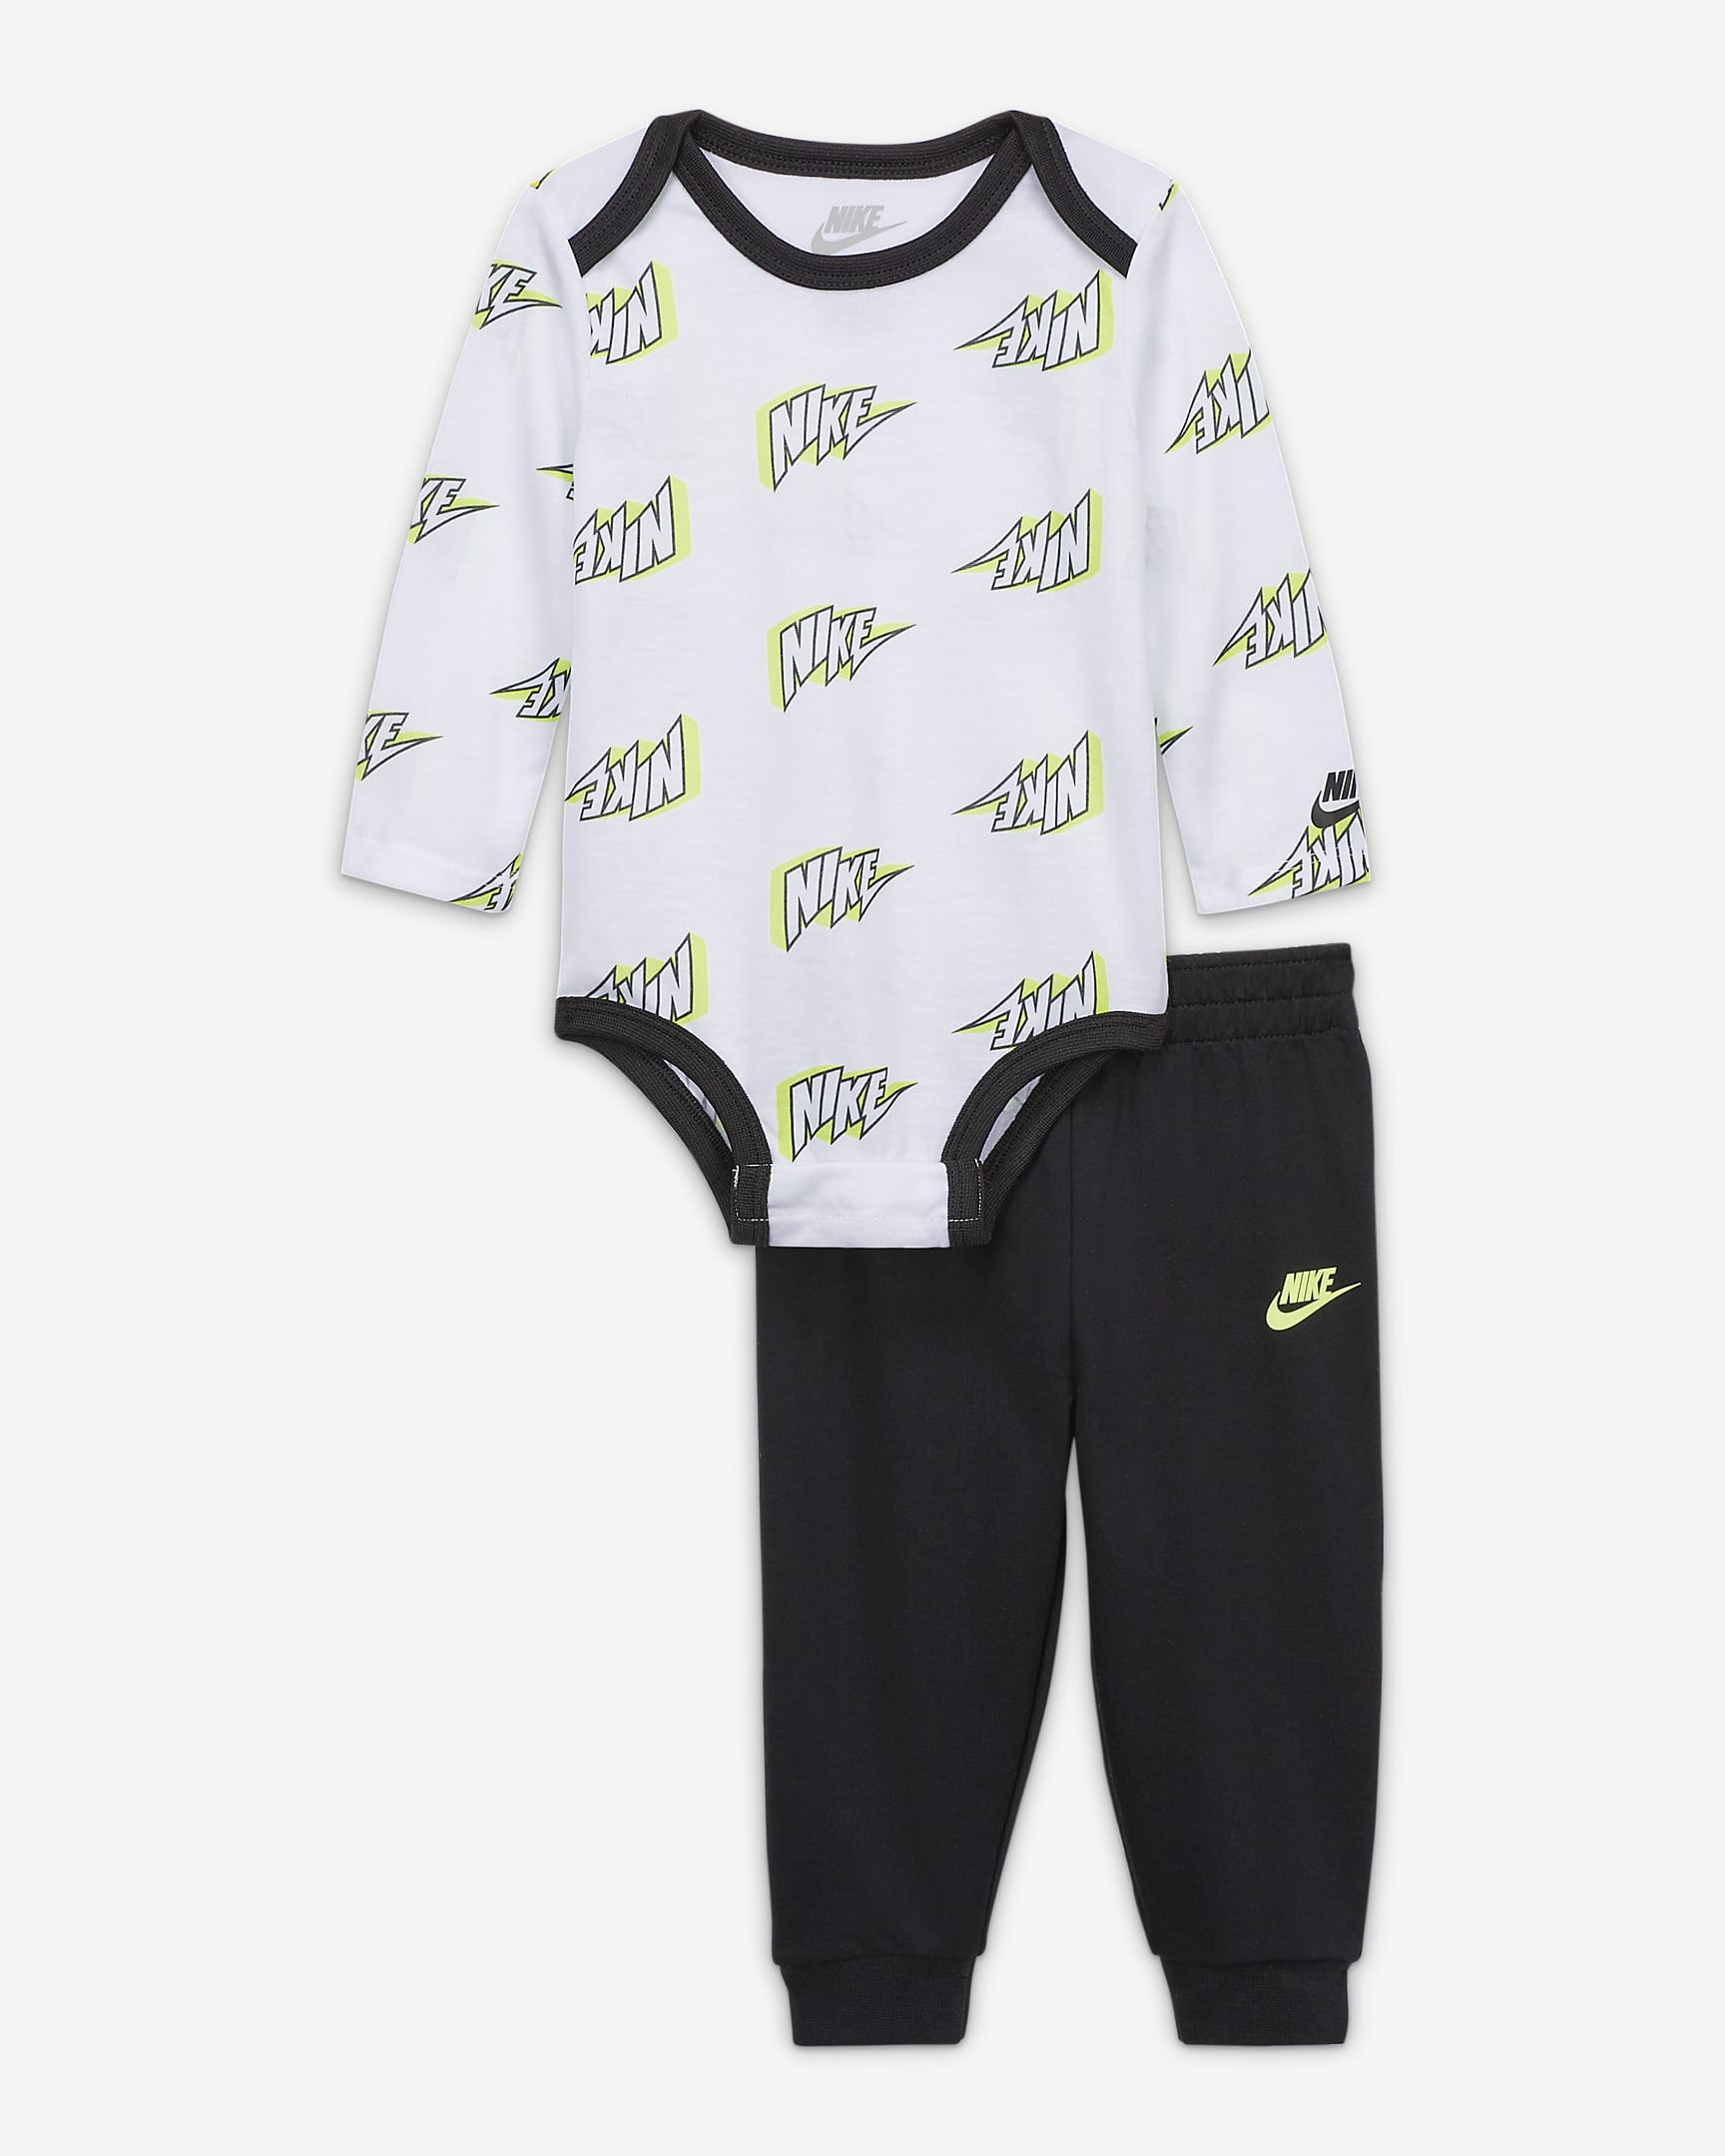 Conjunto de body y pants para bebé Nike (0 a 9 meses). Nike.com